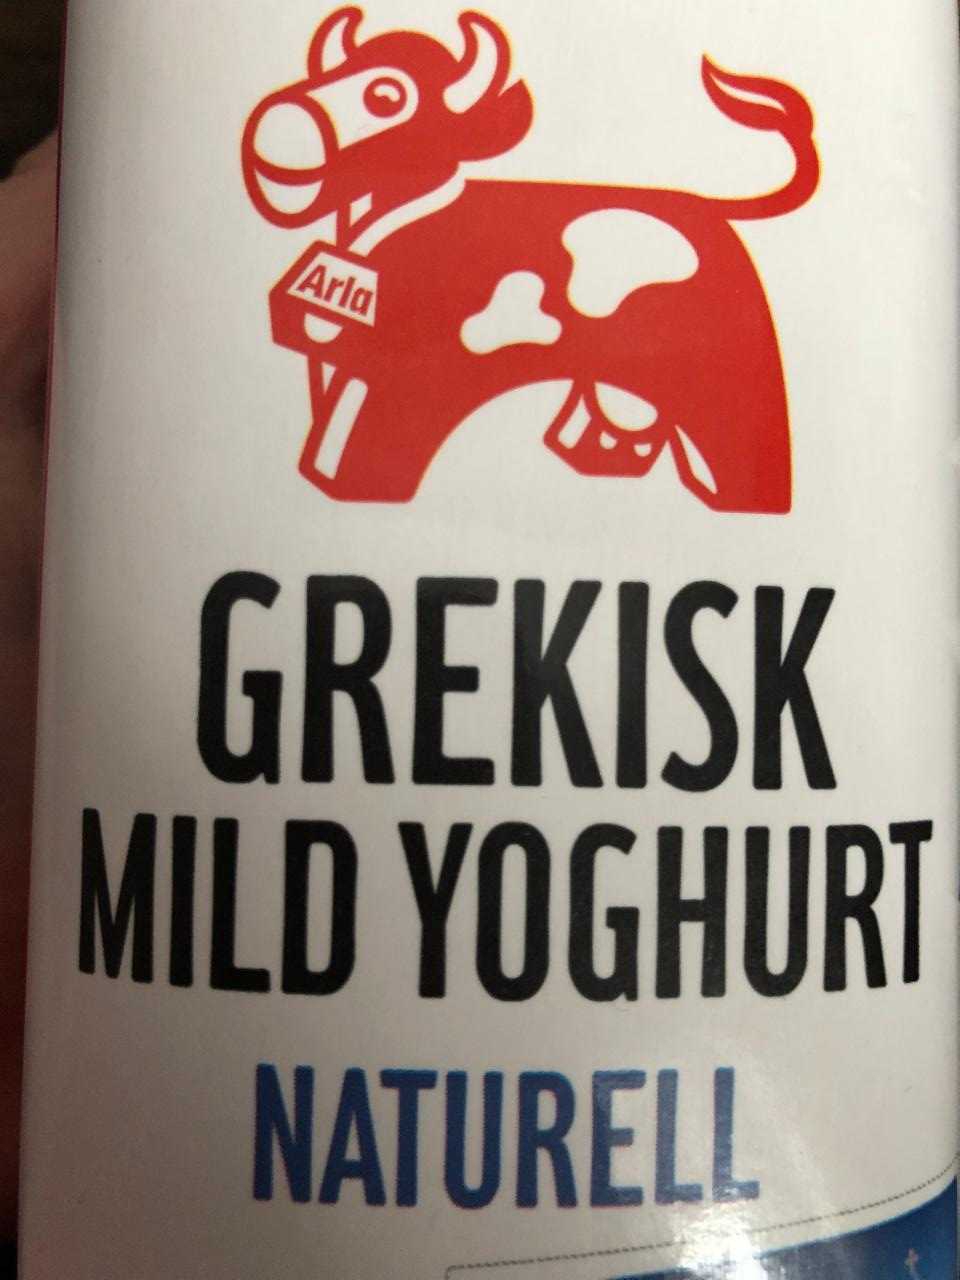 Fotografie - grekisk mild yoghurt naturell Arla